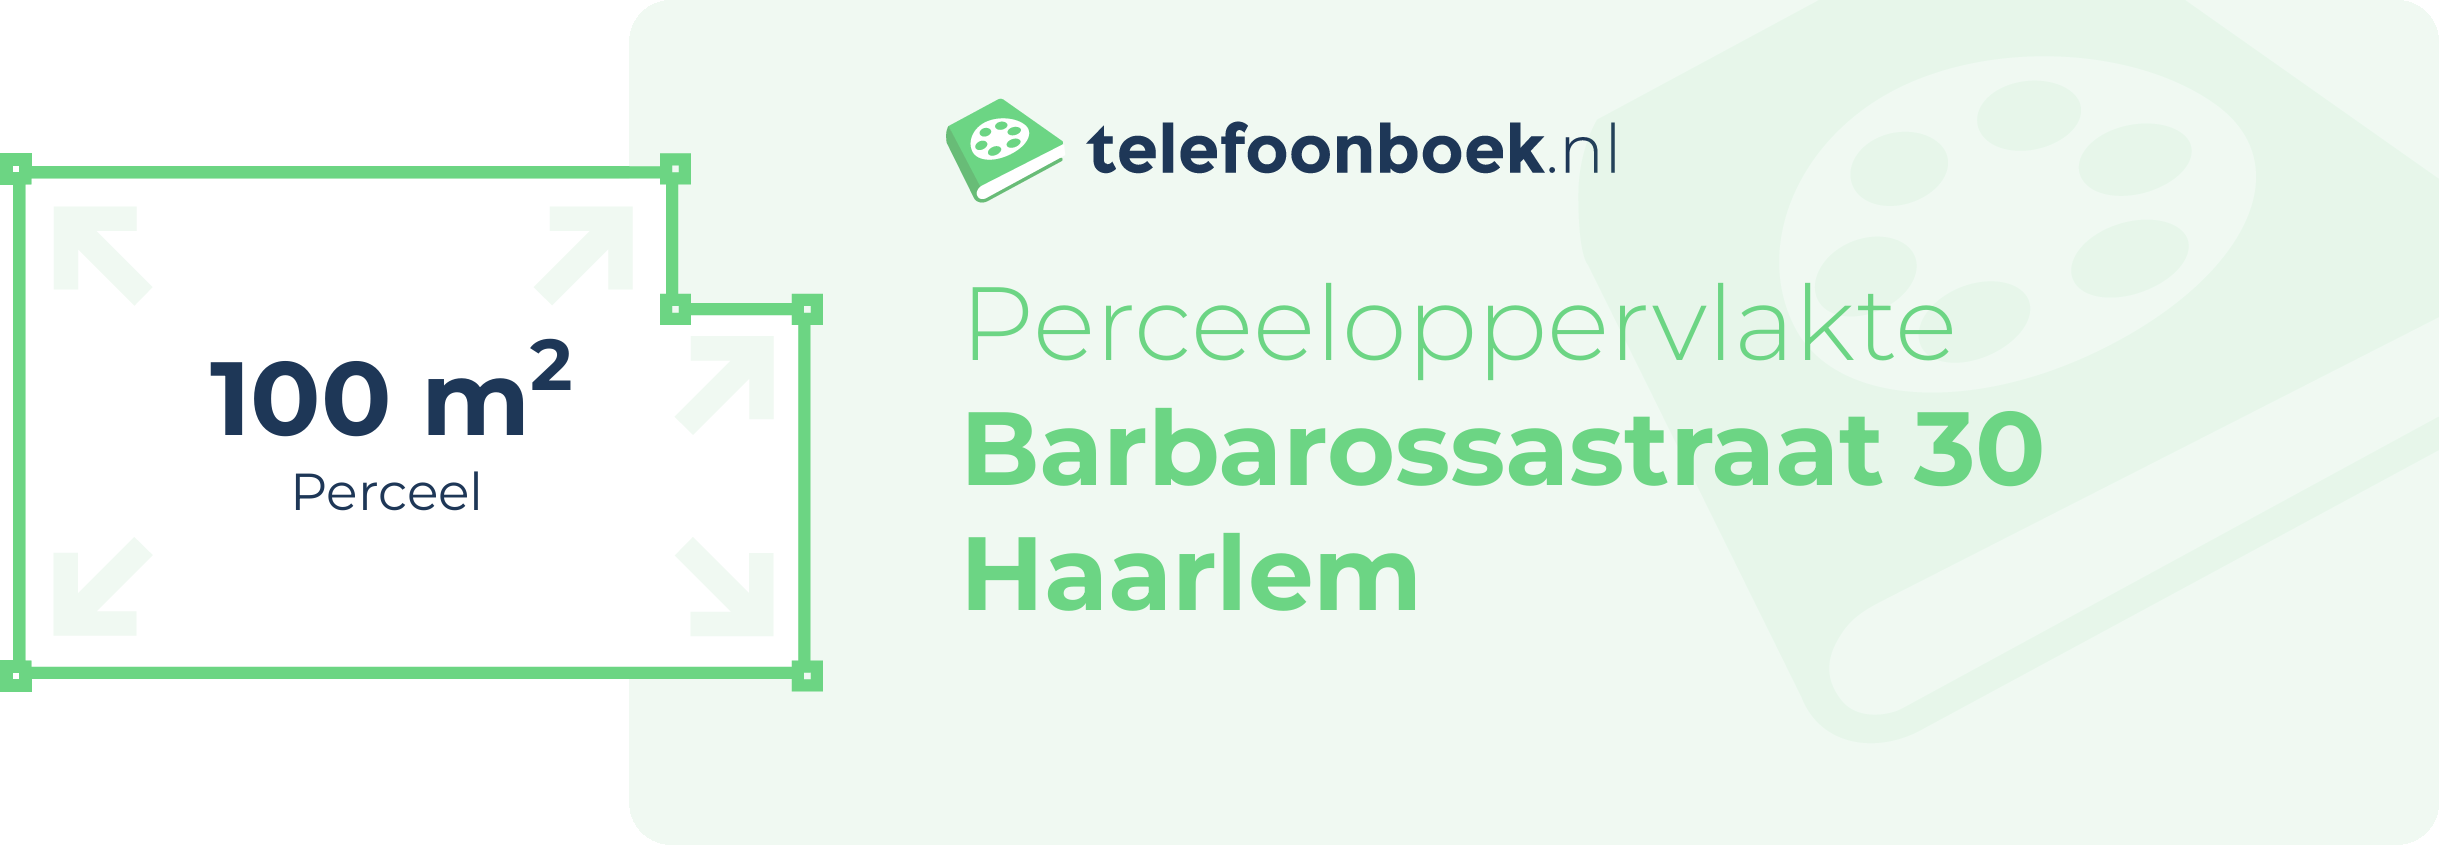 Perceeloppervlakte Barbarossastraat 30 Haarlem